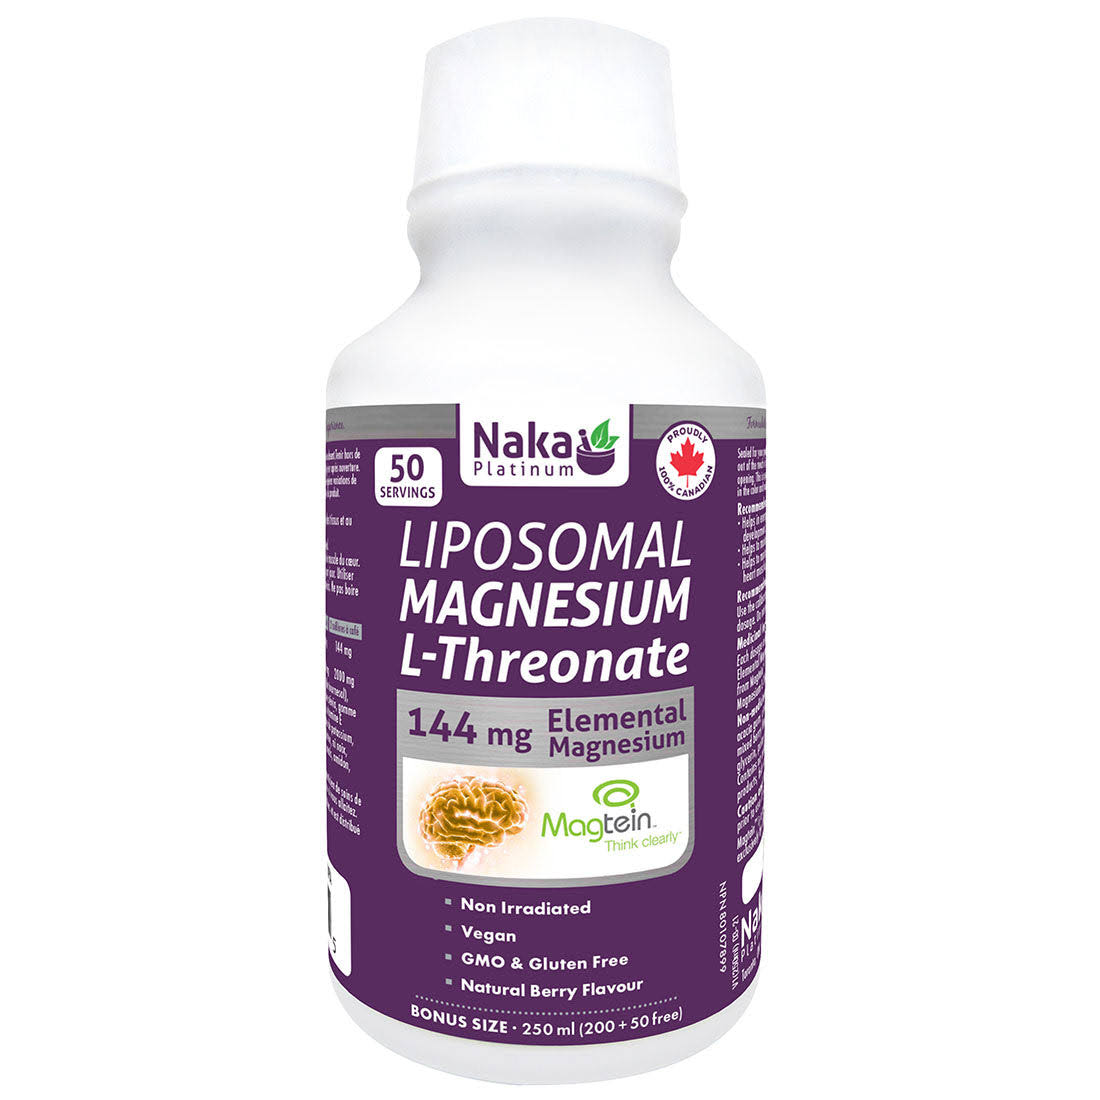 Naka Liposomal Magnesium L-Threonate - 250 ml